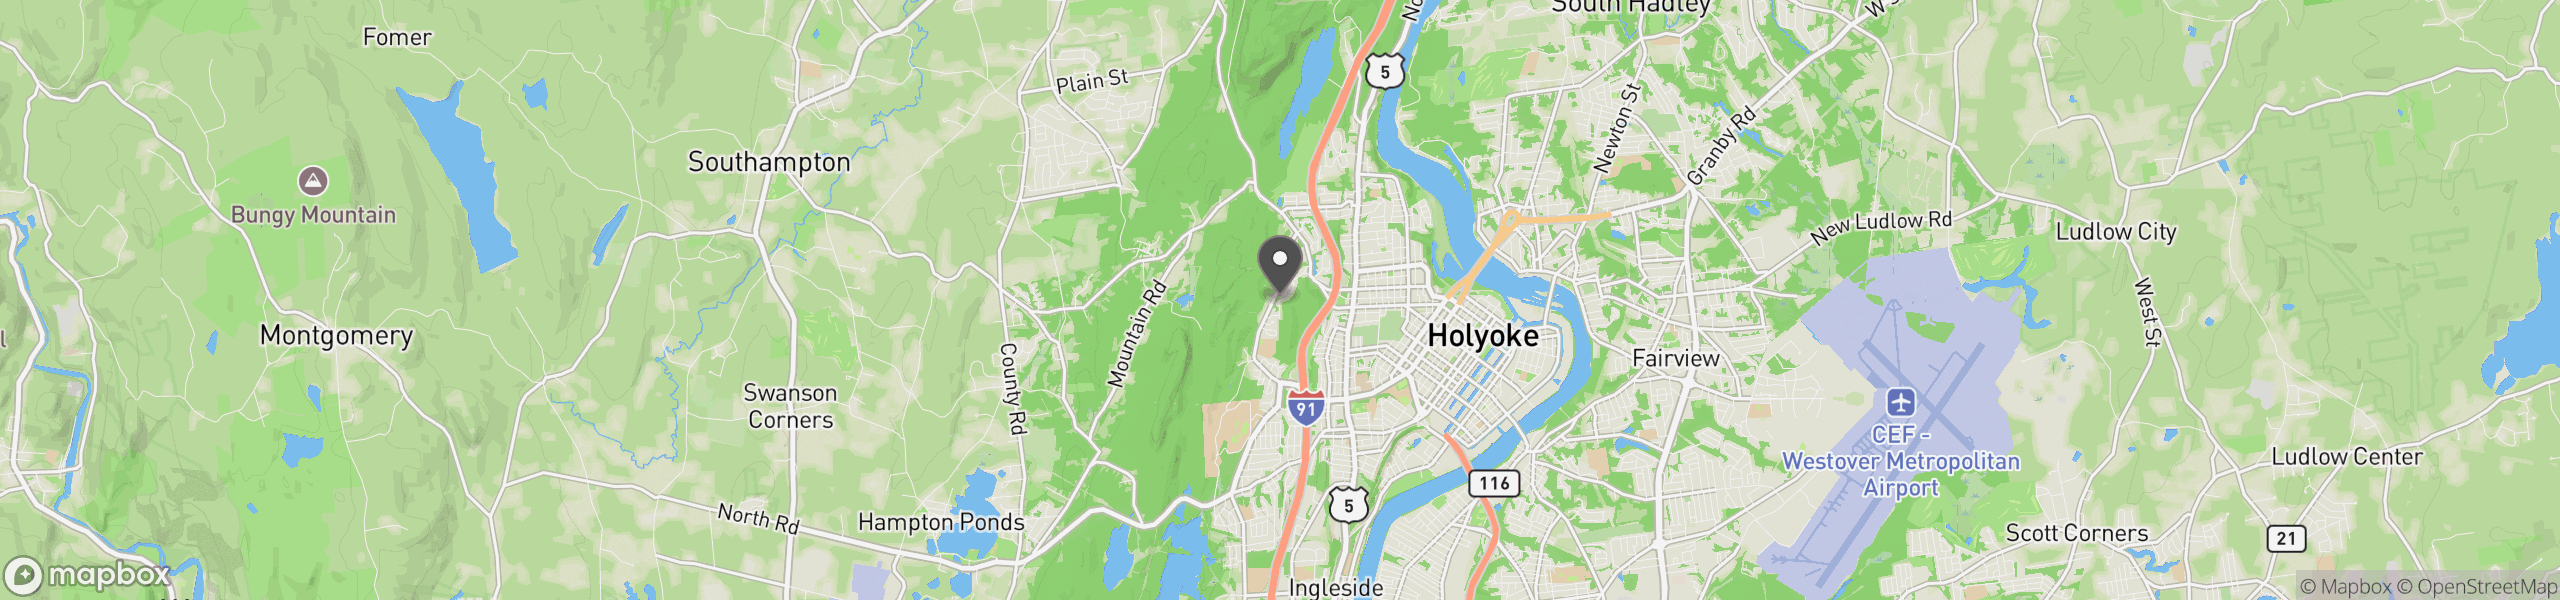 Holyoke, MA 01040